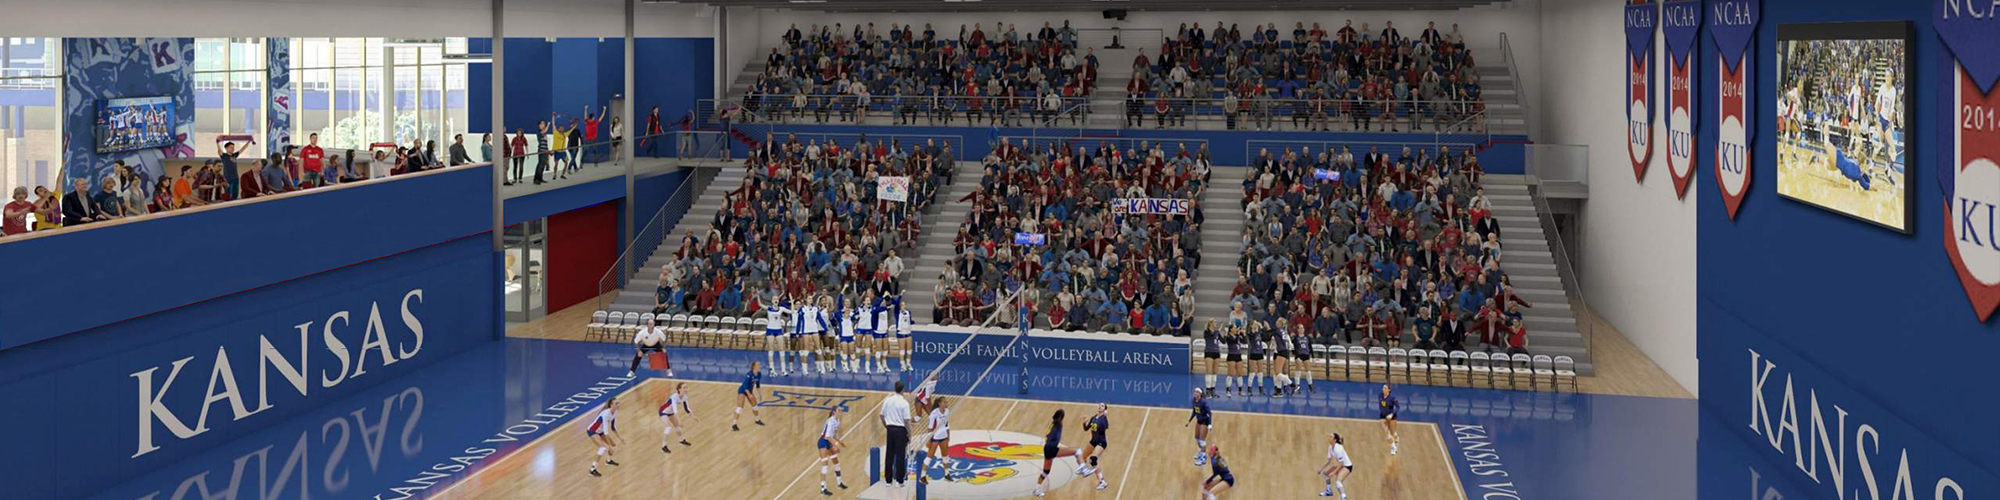 Horejsi Family Volleyball Arena Interior 1